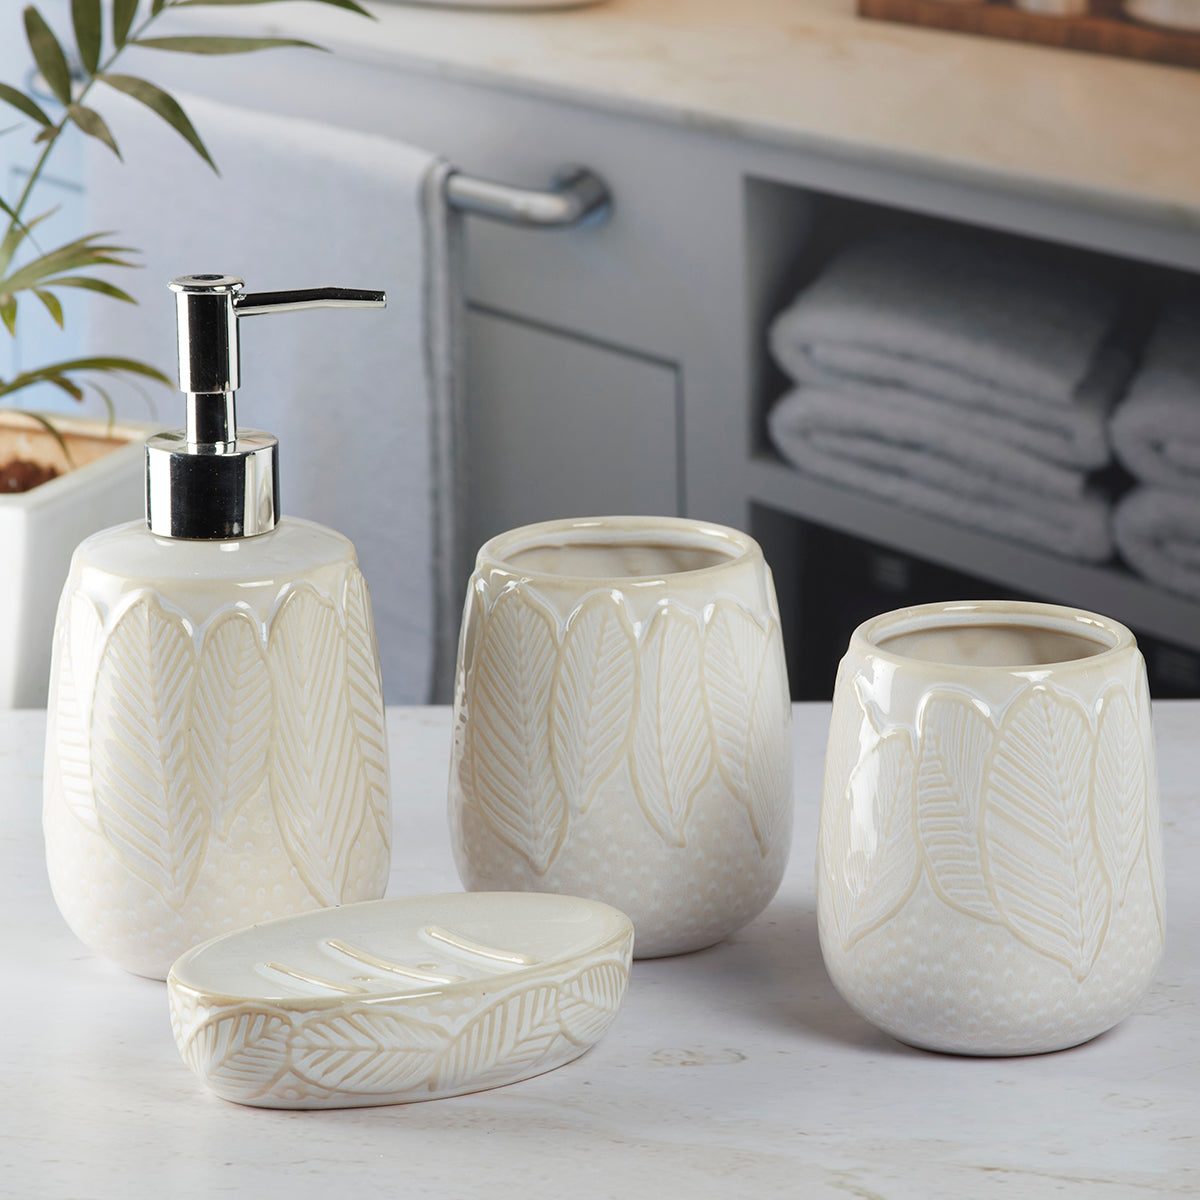 Ceramic Bathroom Accessories Set of 4 Bath Set with Soap Dispenser (9885)